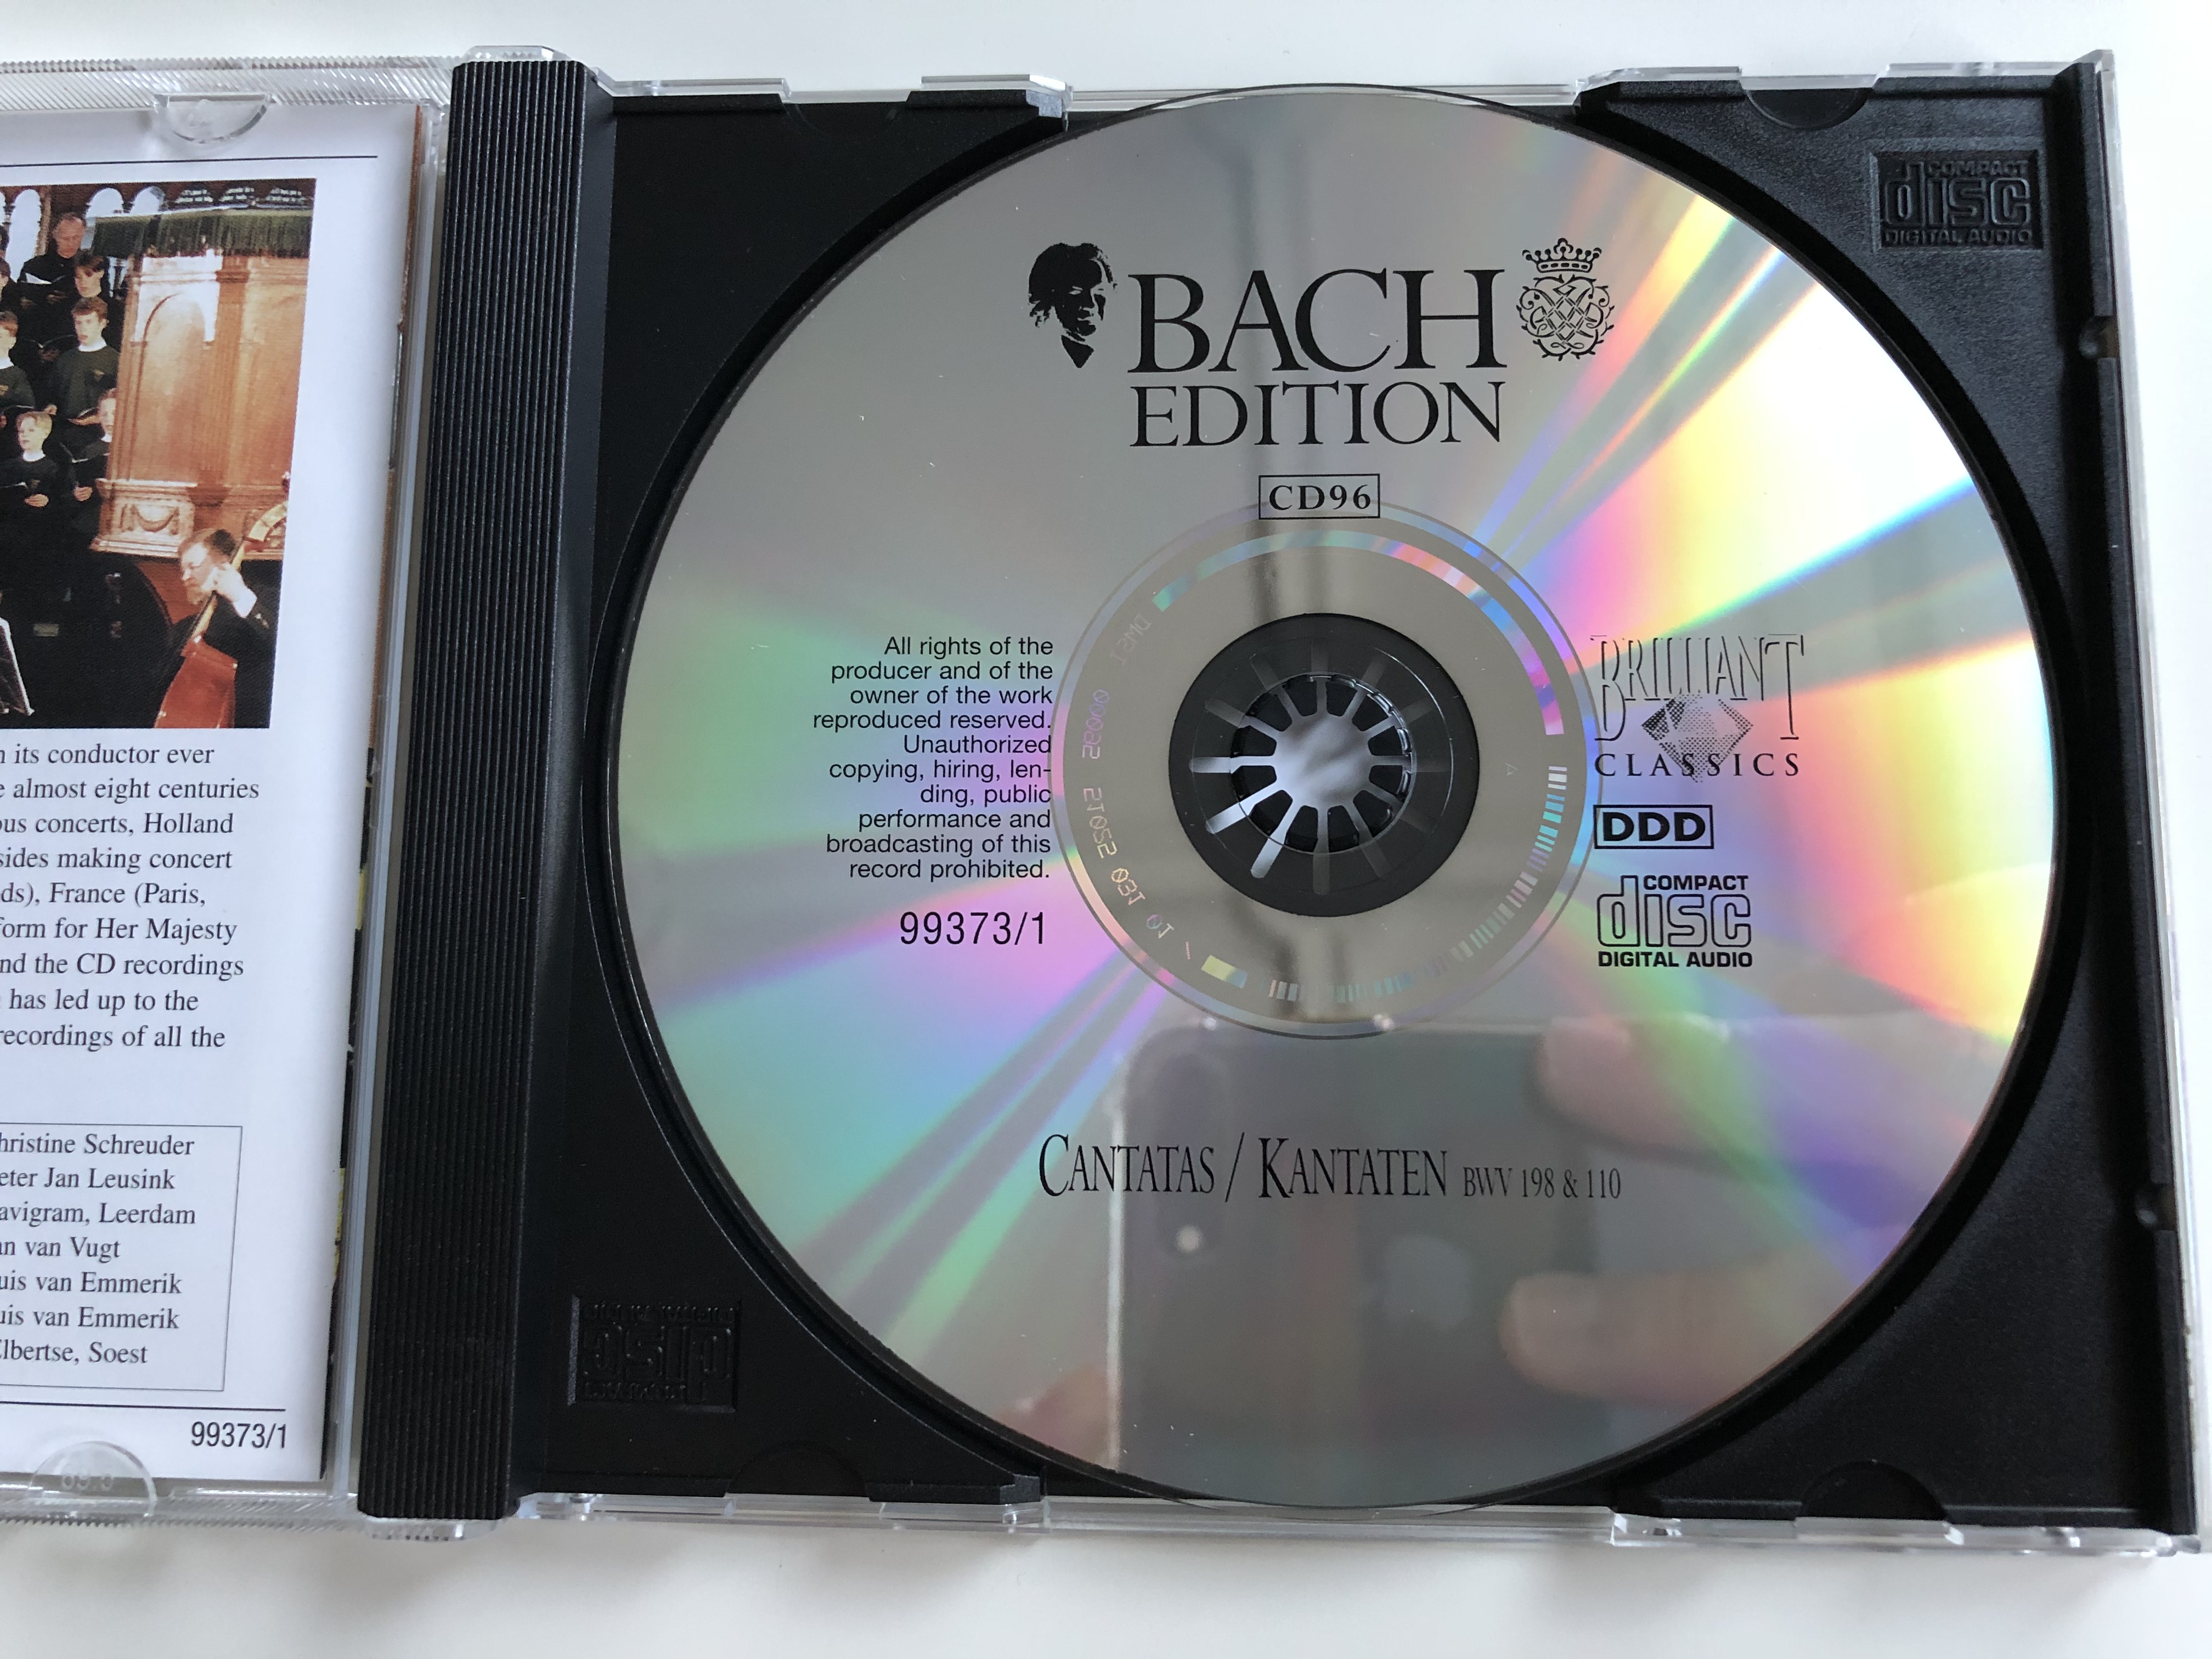 bach-edition-cantatas-kantaten-la-f-rstin-la-noch-einen-strahl-bwv-198-unser-mund-sei-voll-lachens-bwv-110-brilliant-classics-audio-cd-993731-3-.jpg